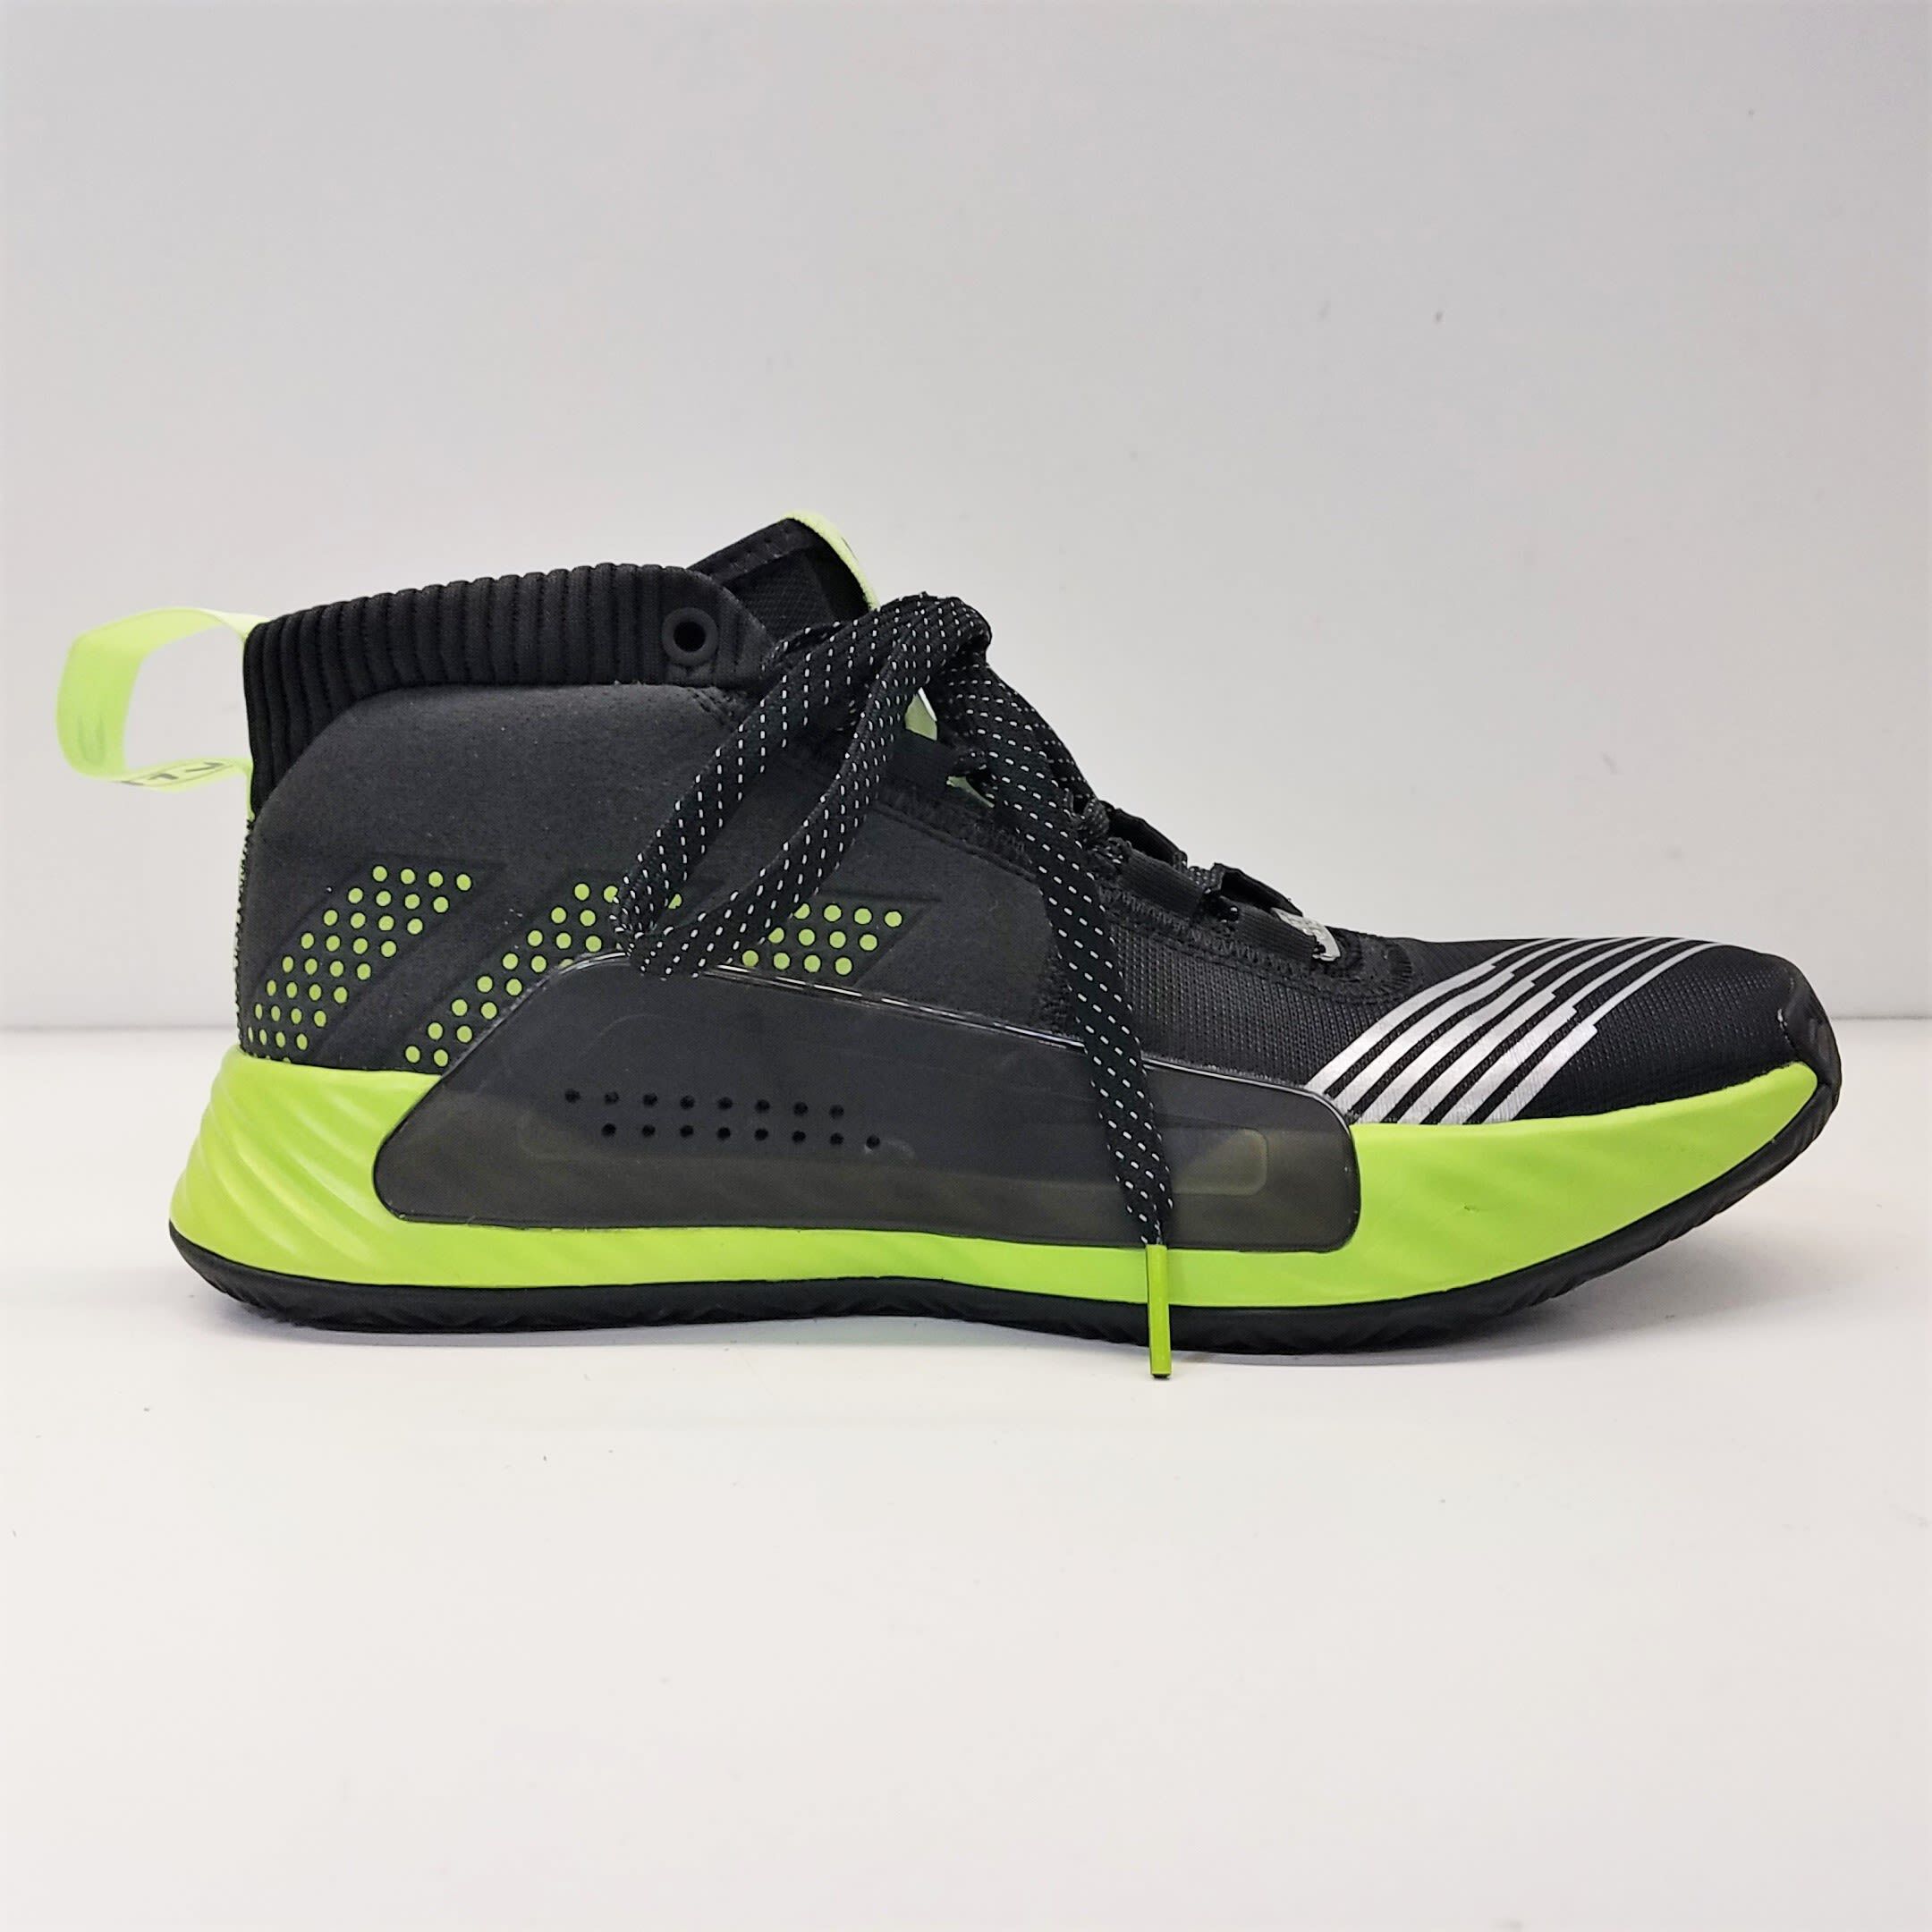 adidas lightsaber shoes